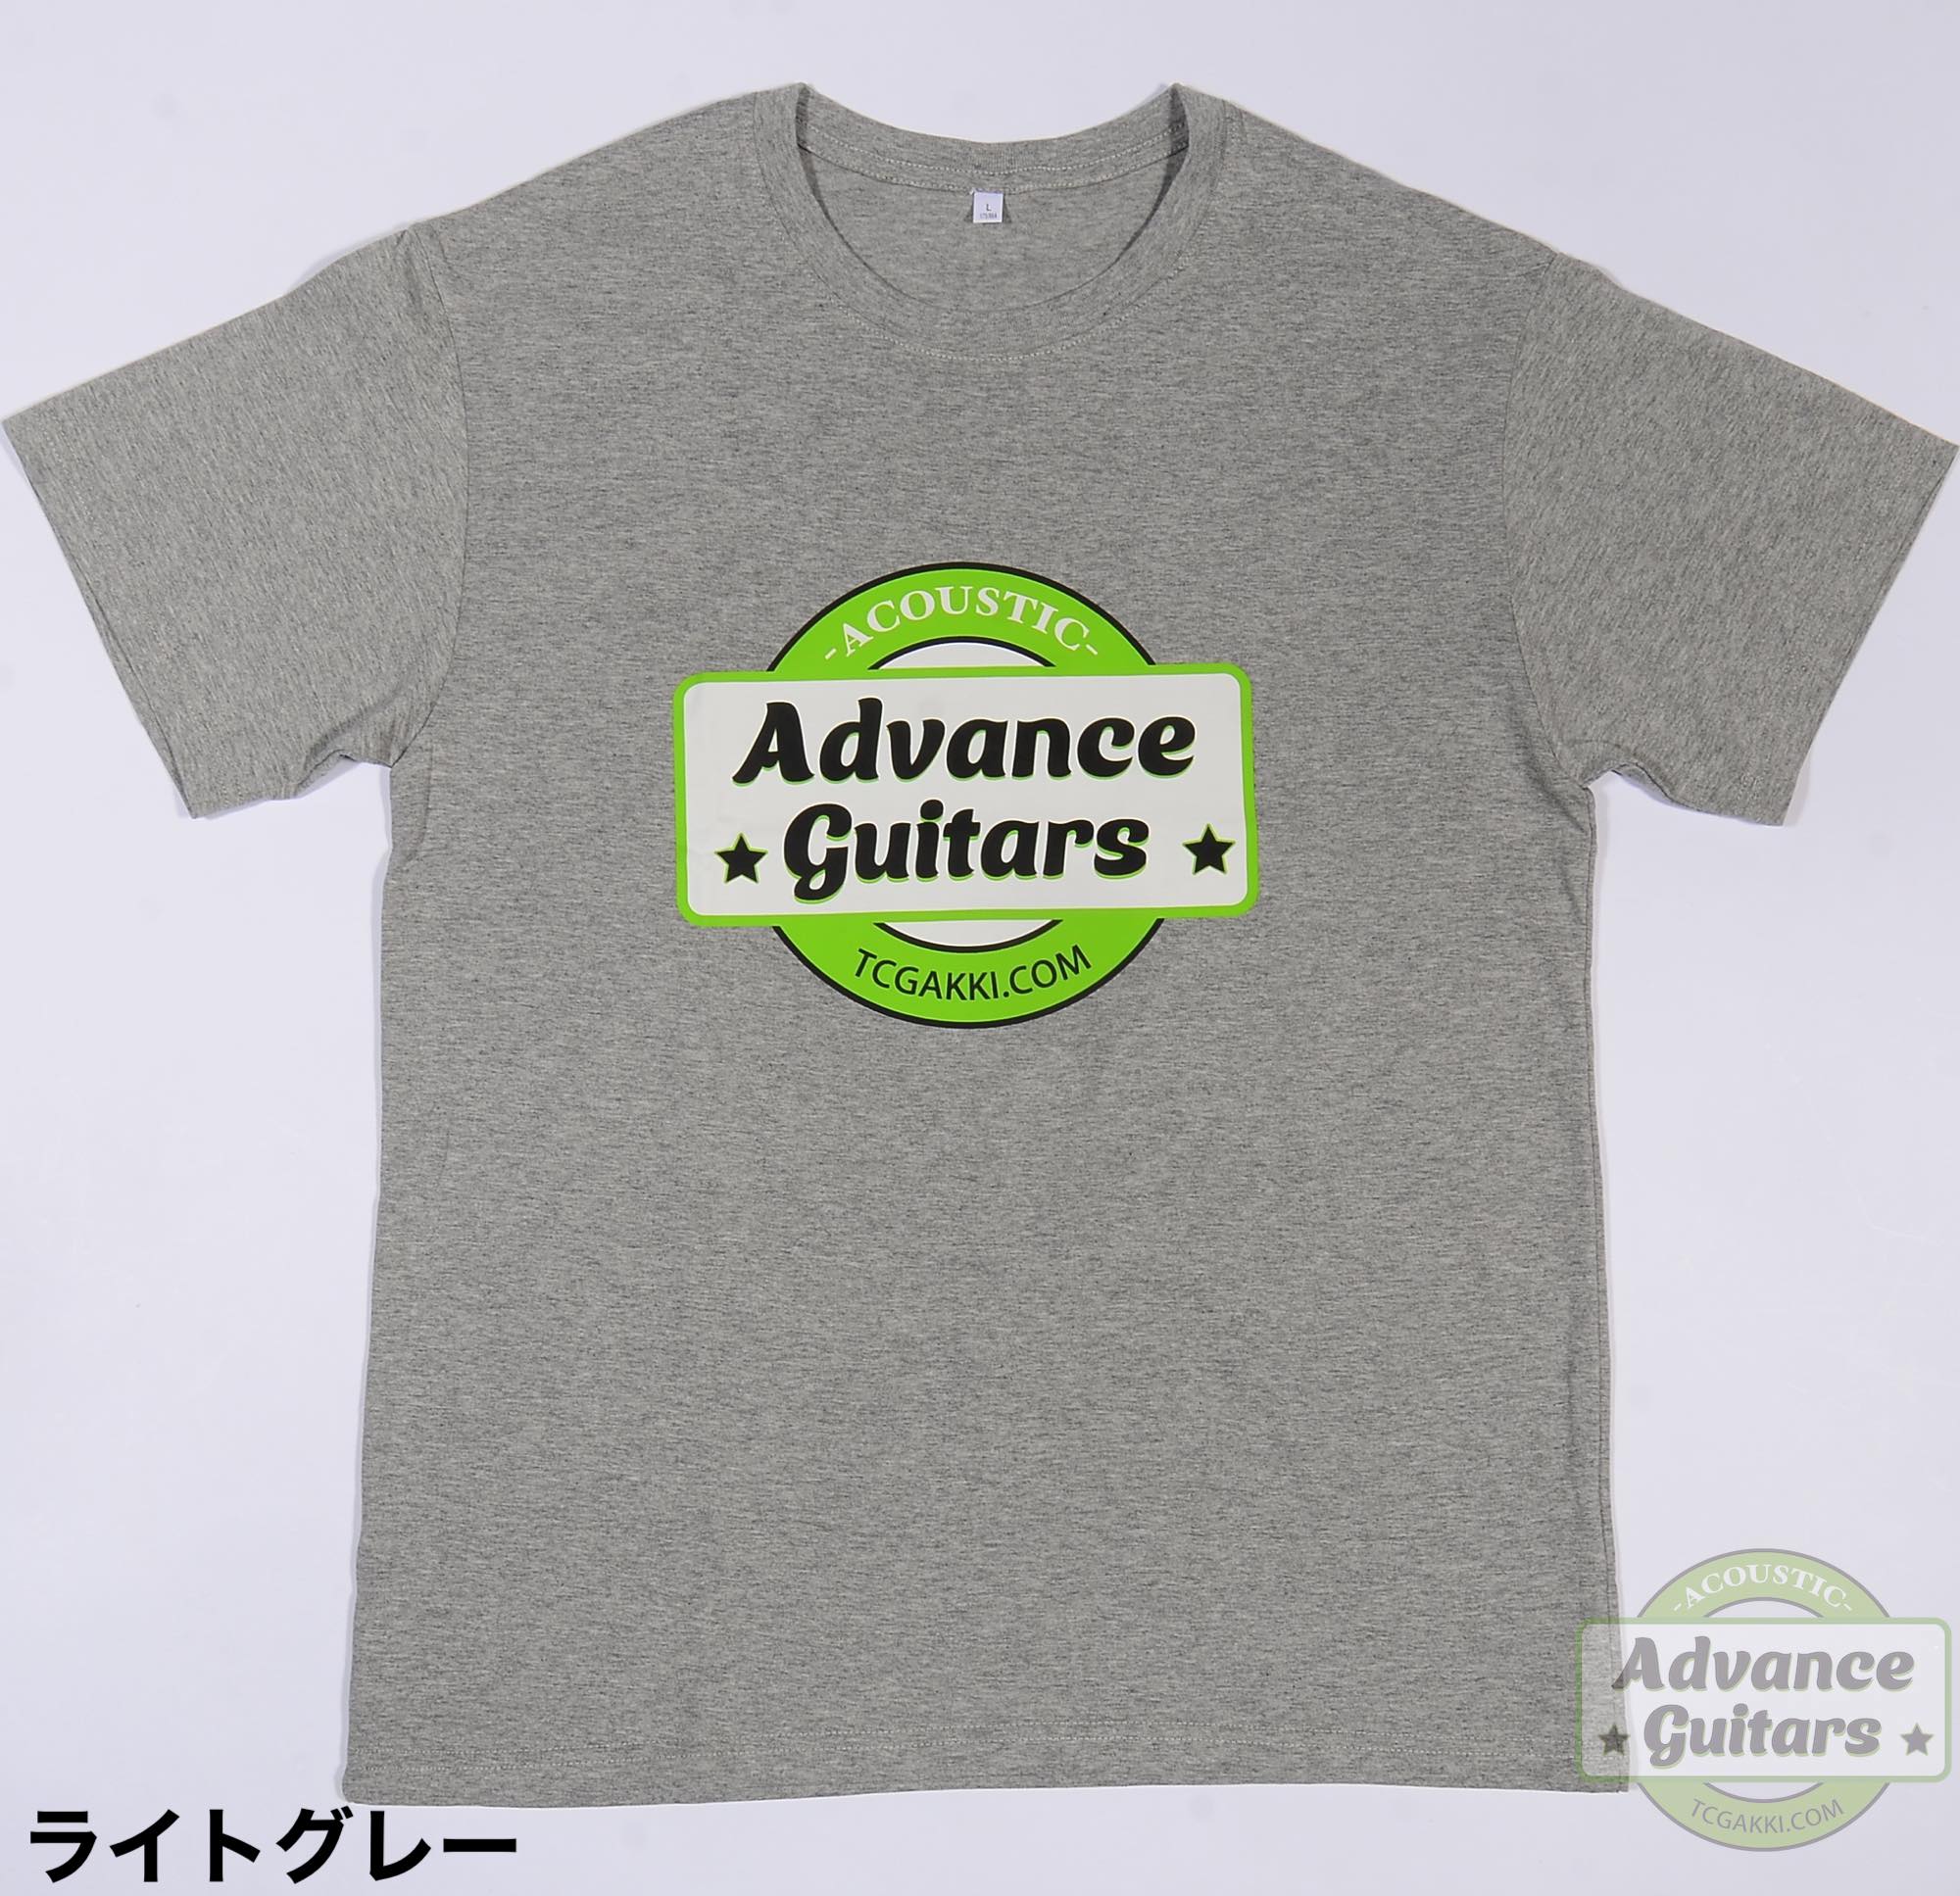 Advance Guitars オープン記念Tシャツ - TC楽器 - TCGAKKI